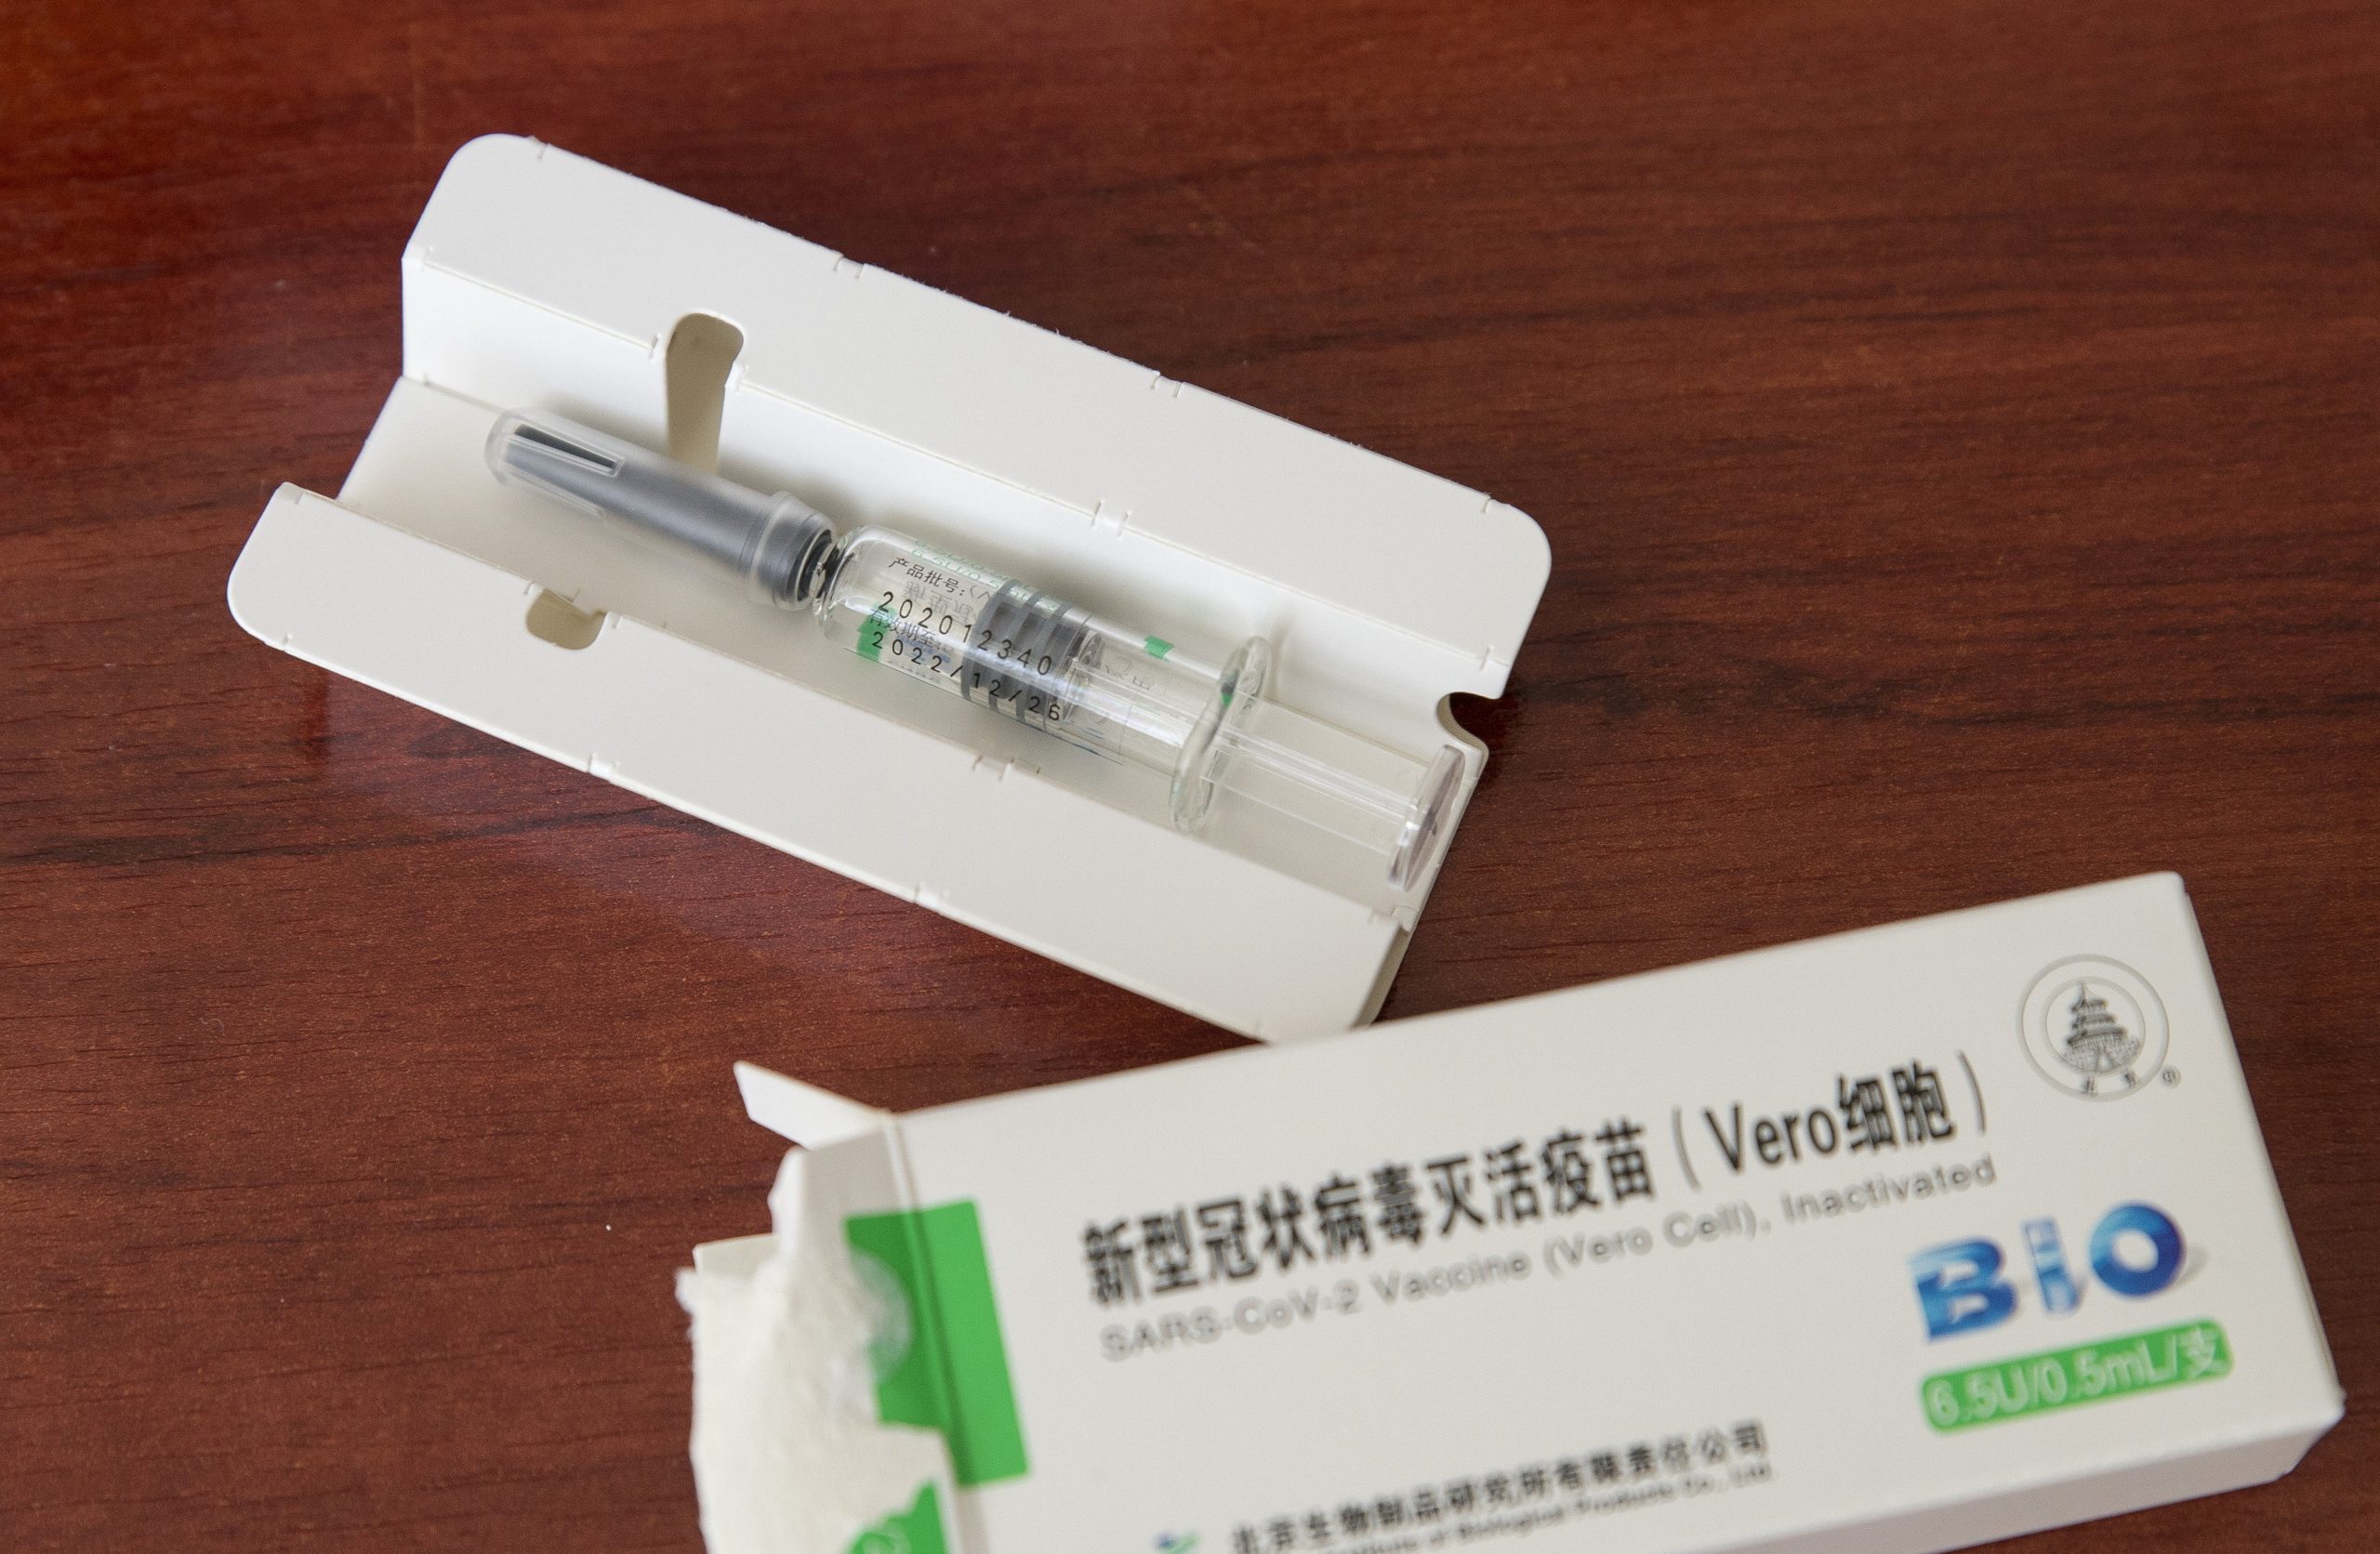 Budapost: Chinesischer Corona-Impfstoff im Umlauf